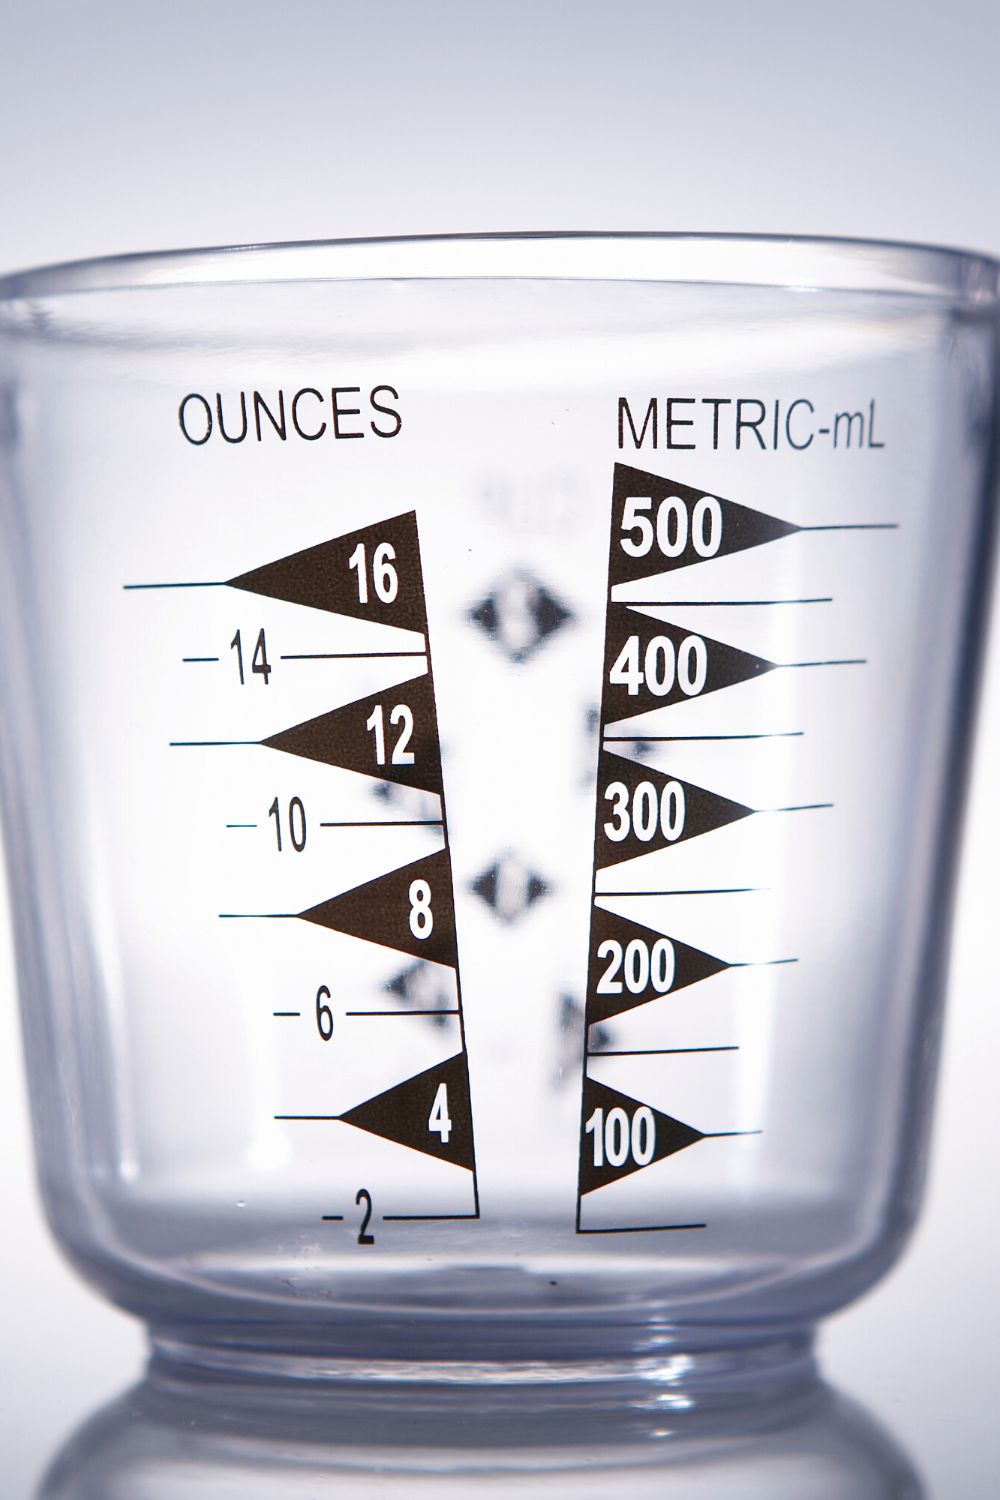 A liquid measuring cup